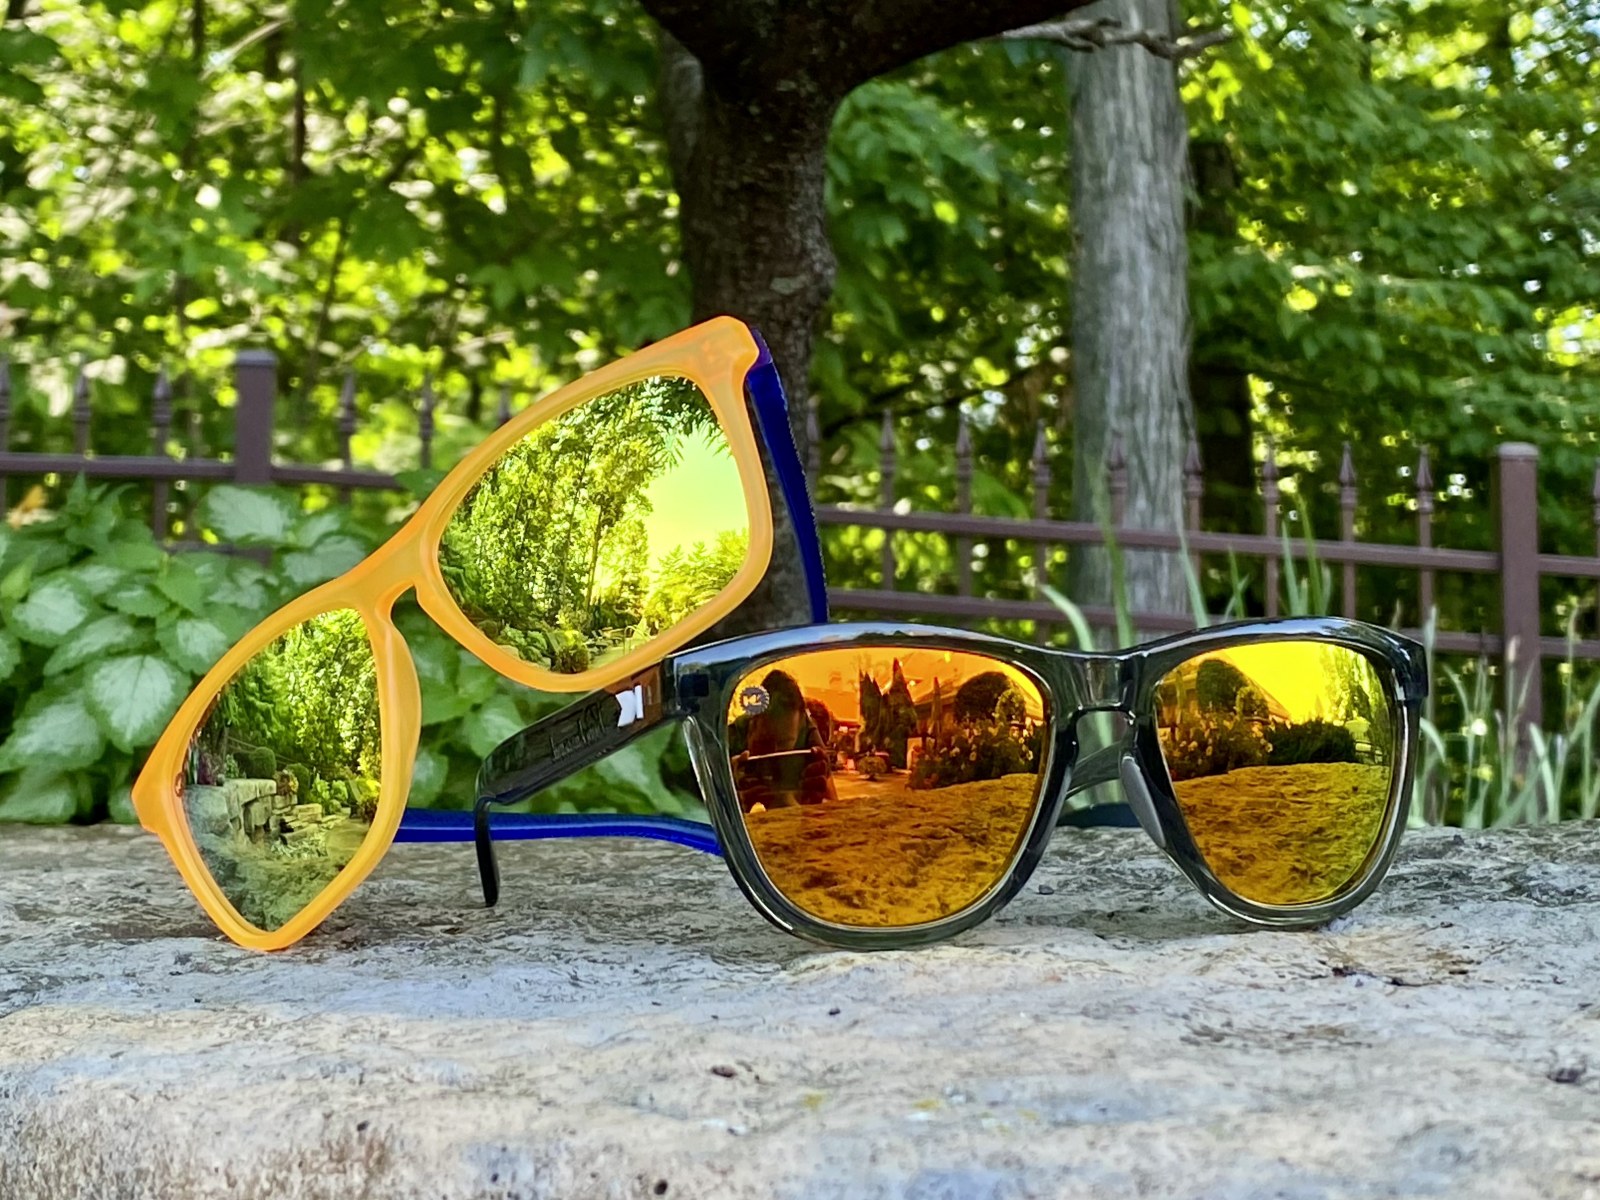 Knockaround Classic Polarized Sunglasses